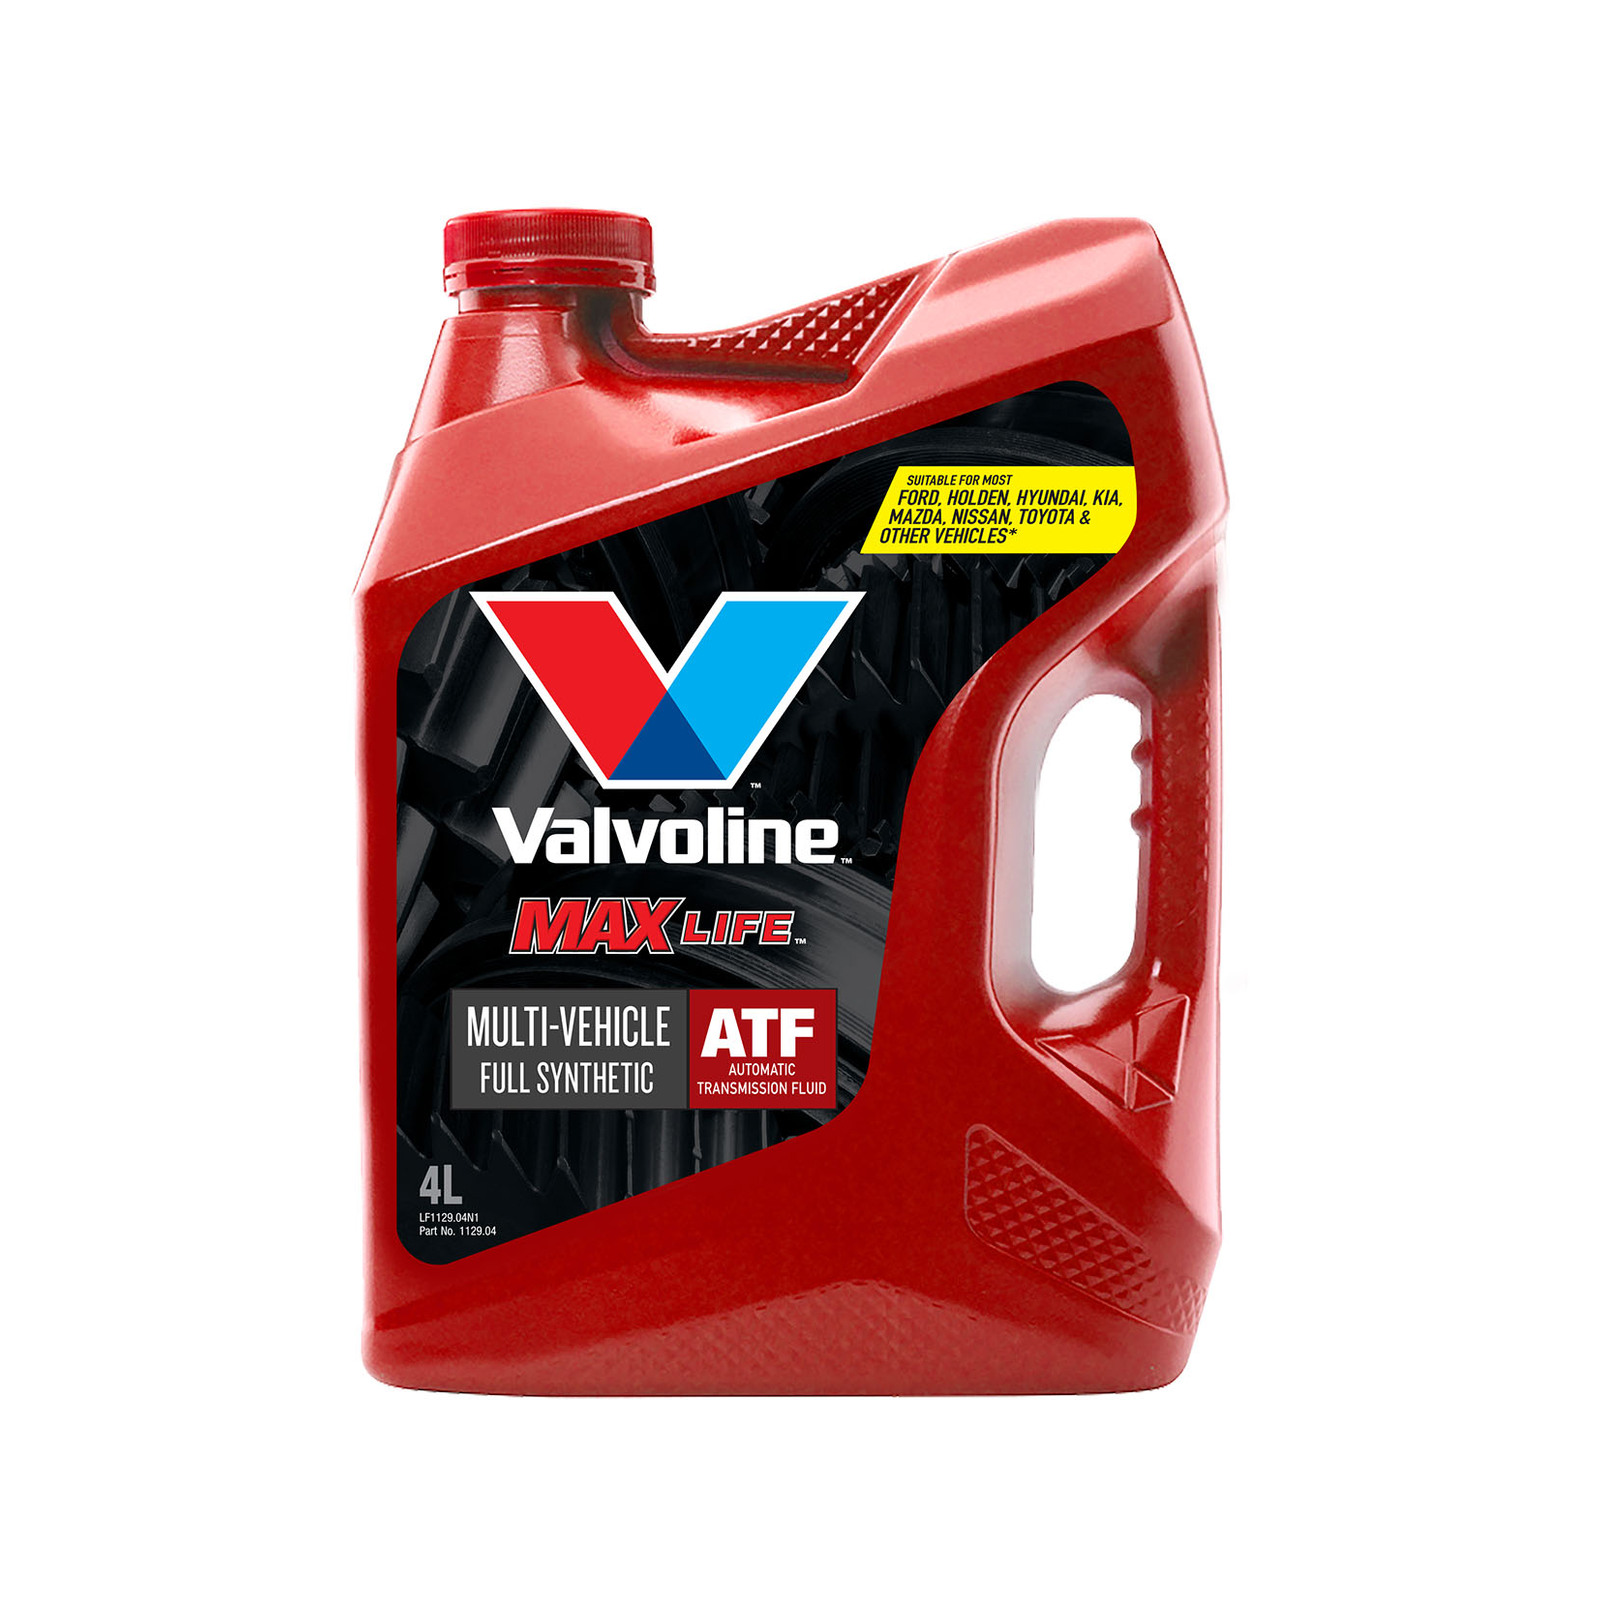  Valvoline Import Multi-Vehicle (ATF) Full Synthetic